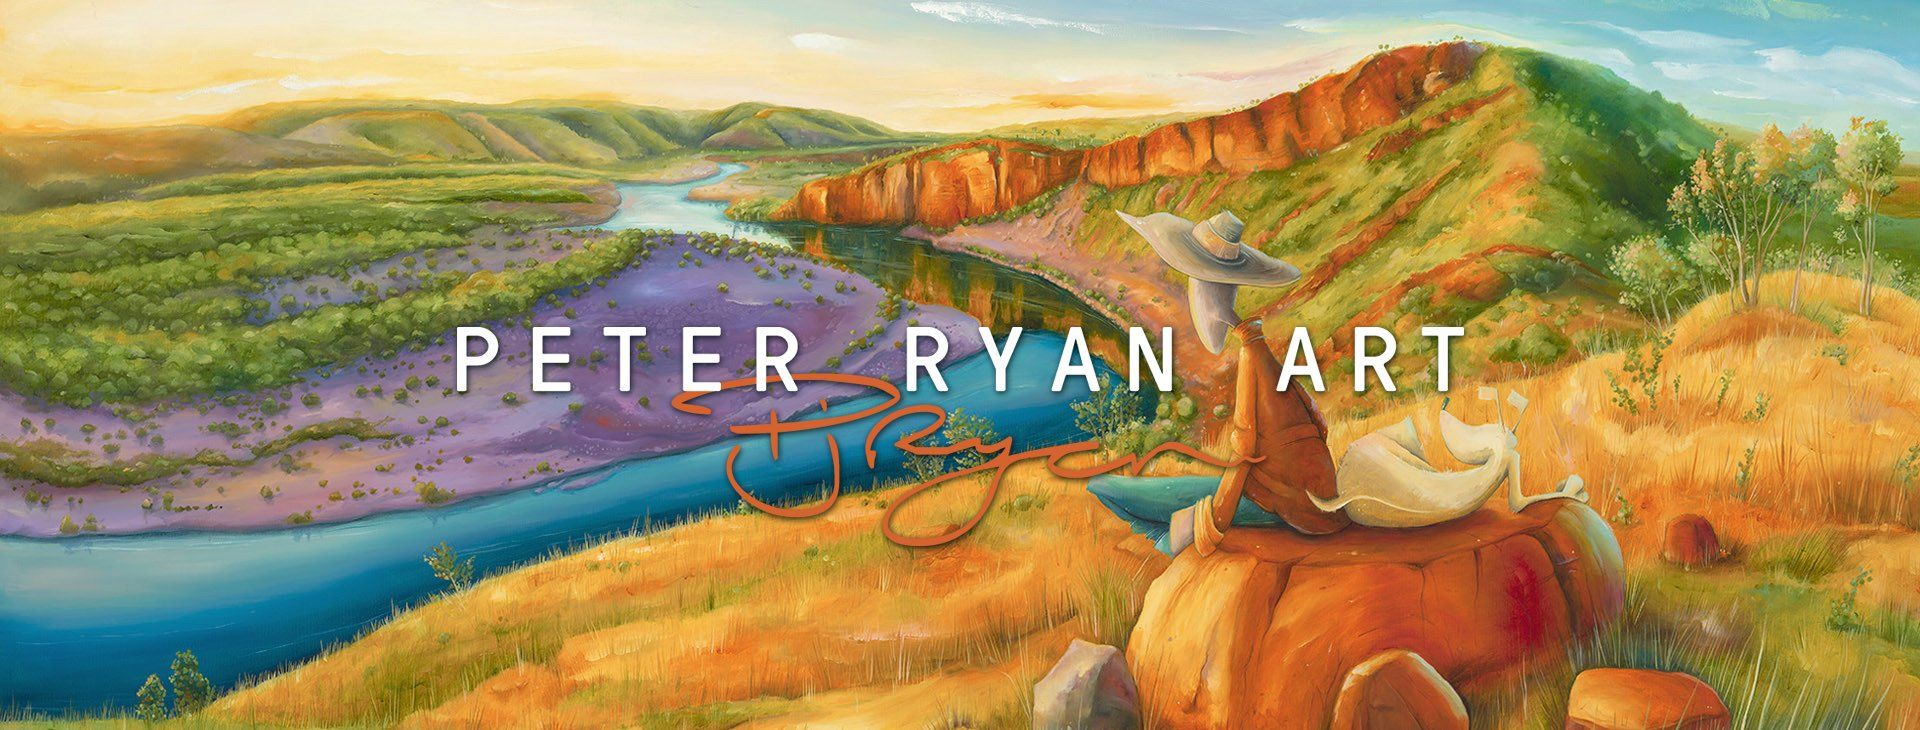 Peter Ryan Art, Australian Silo Art Trail